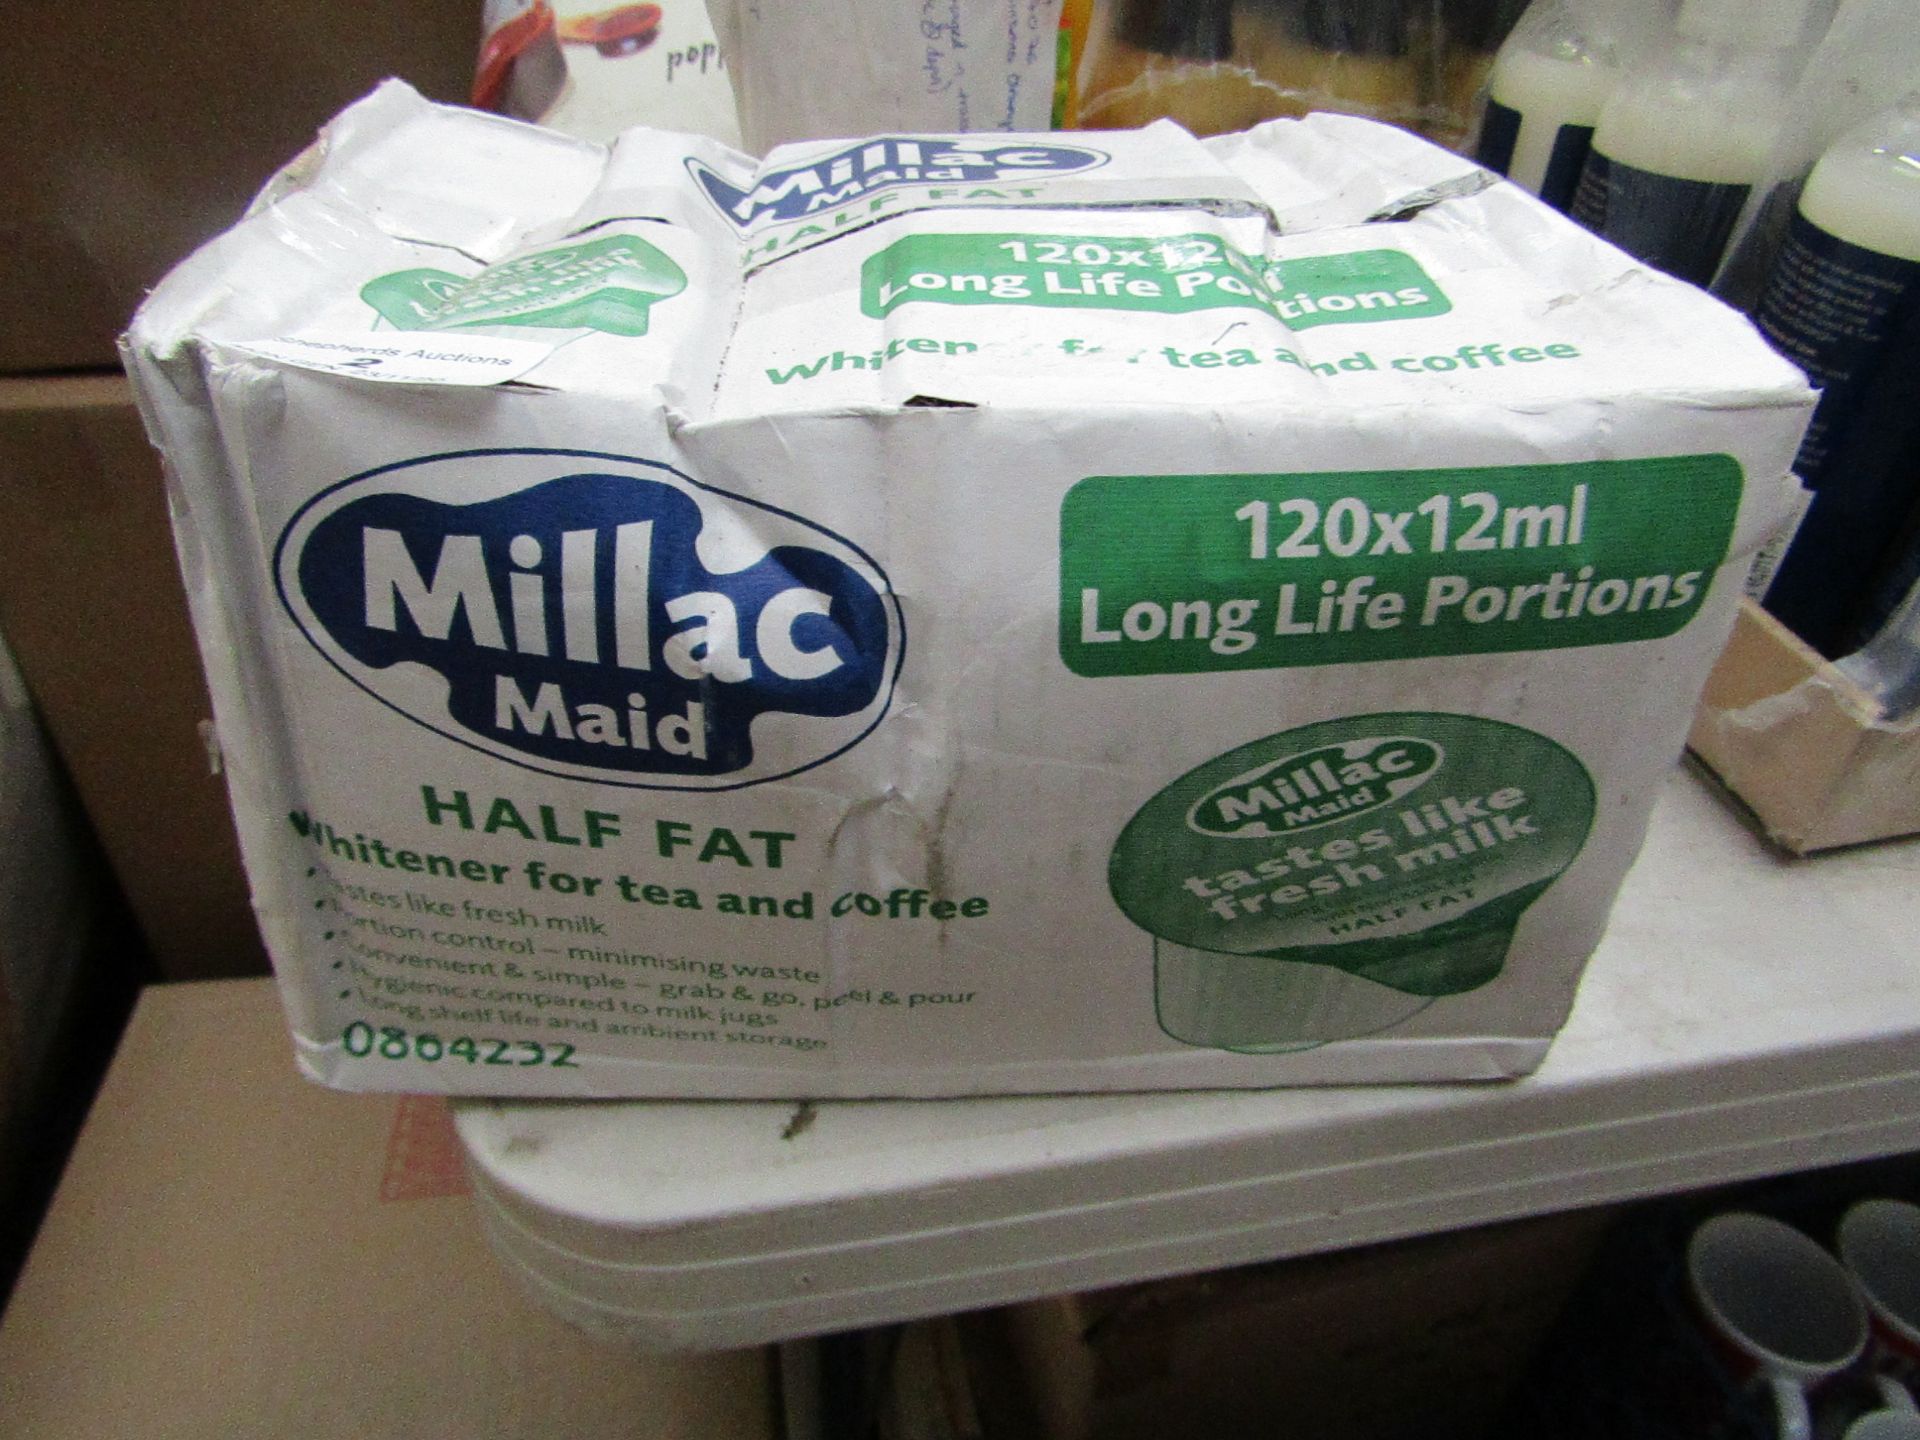 Millac Maid - Half Fat Whitener (120x12ml) - 22/09/20 - Box Crinkled.